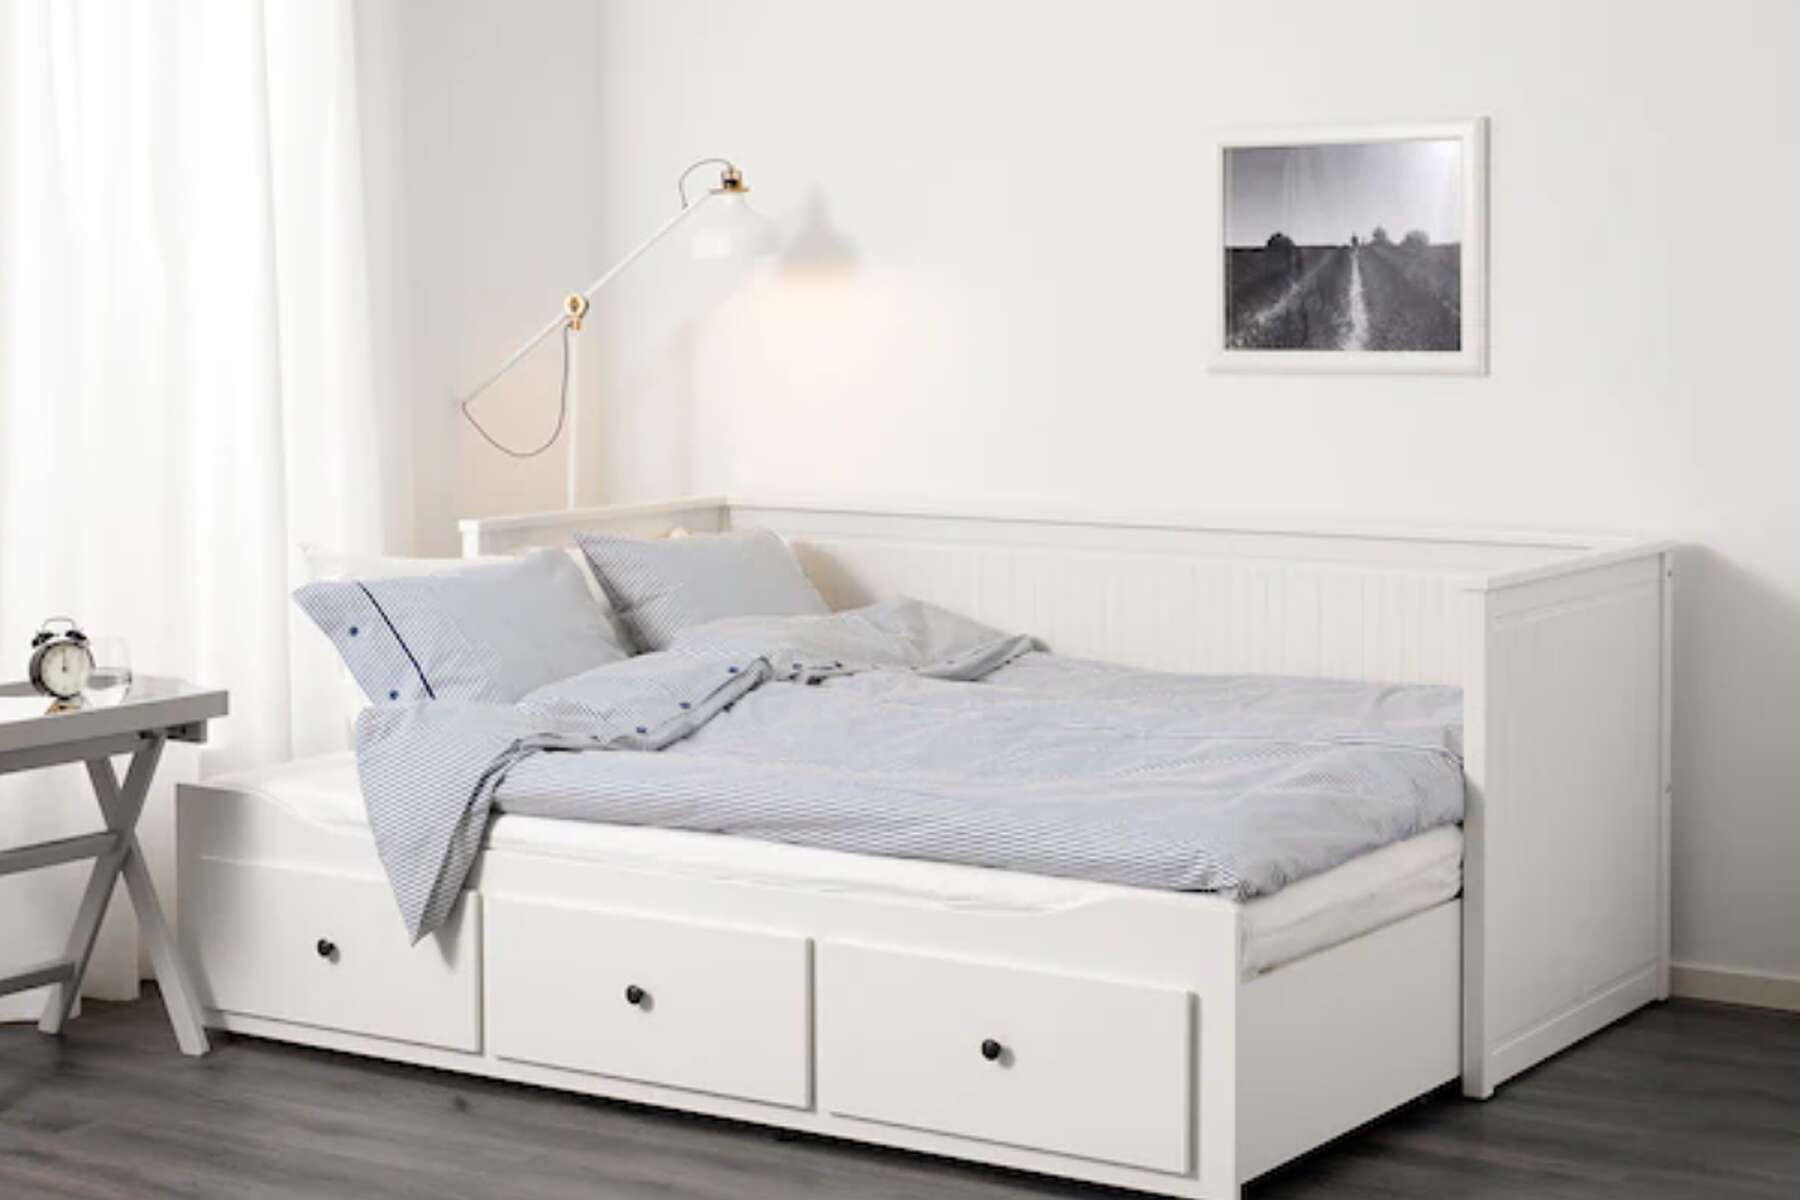 Ikea Houston Best Bedroom Furniture, King Single Bunk Beds Ikea